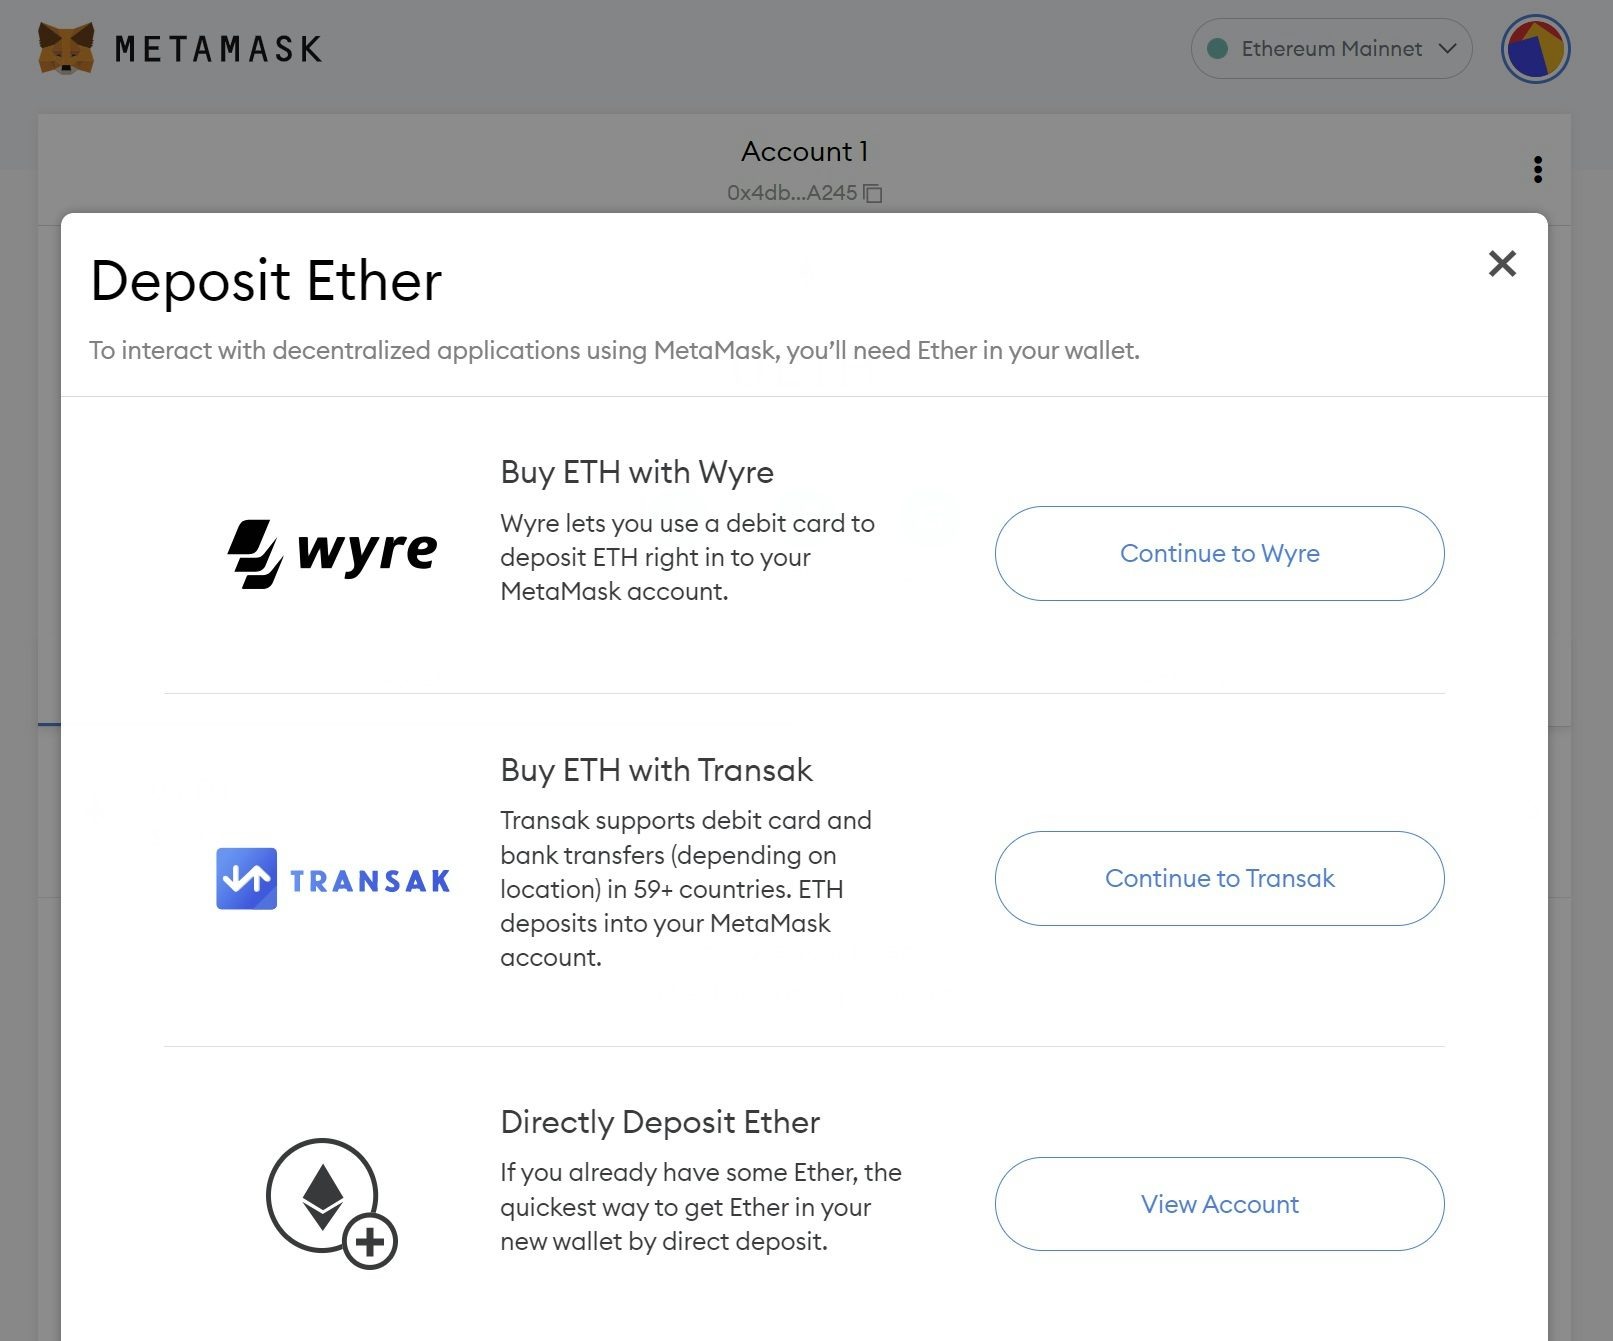 Buy or Deposit Ethereum to fund your MetaMask